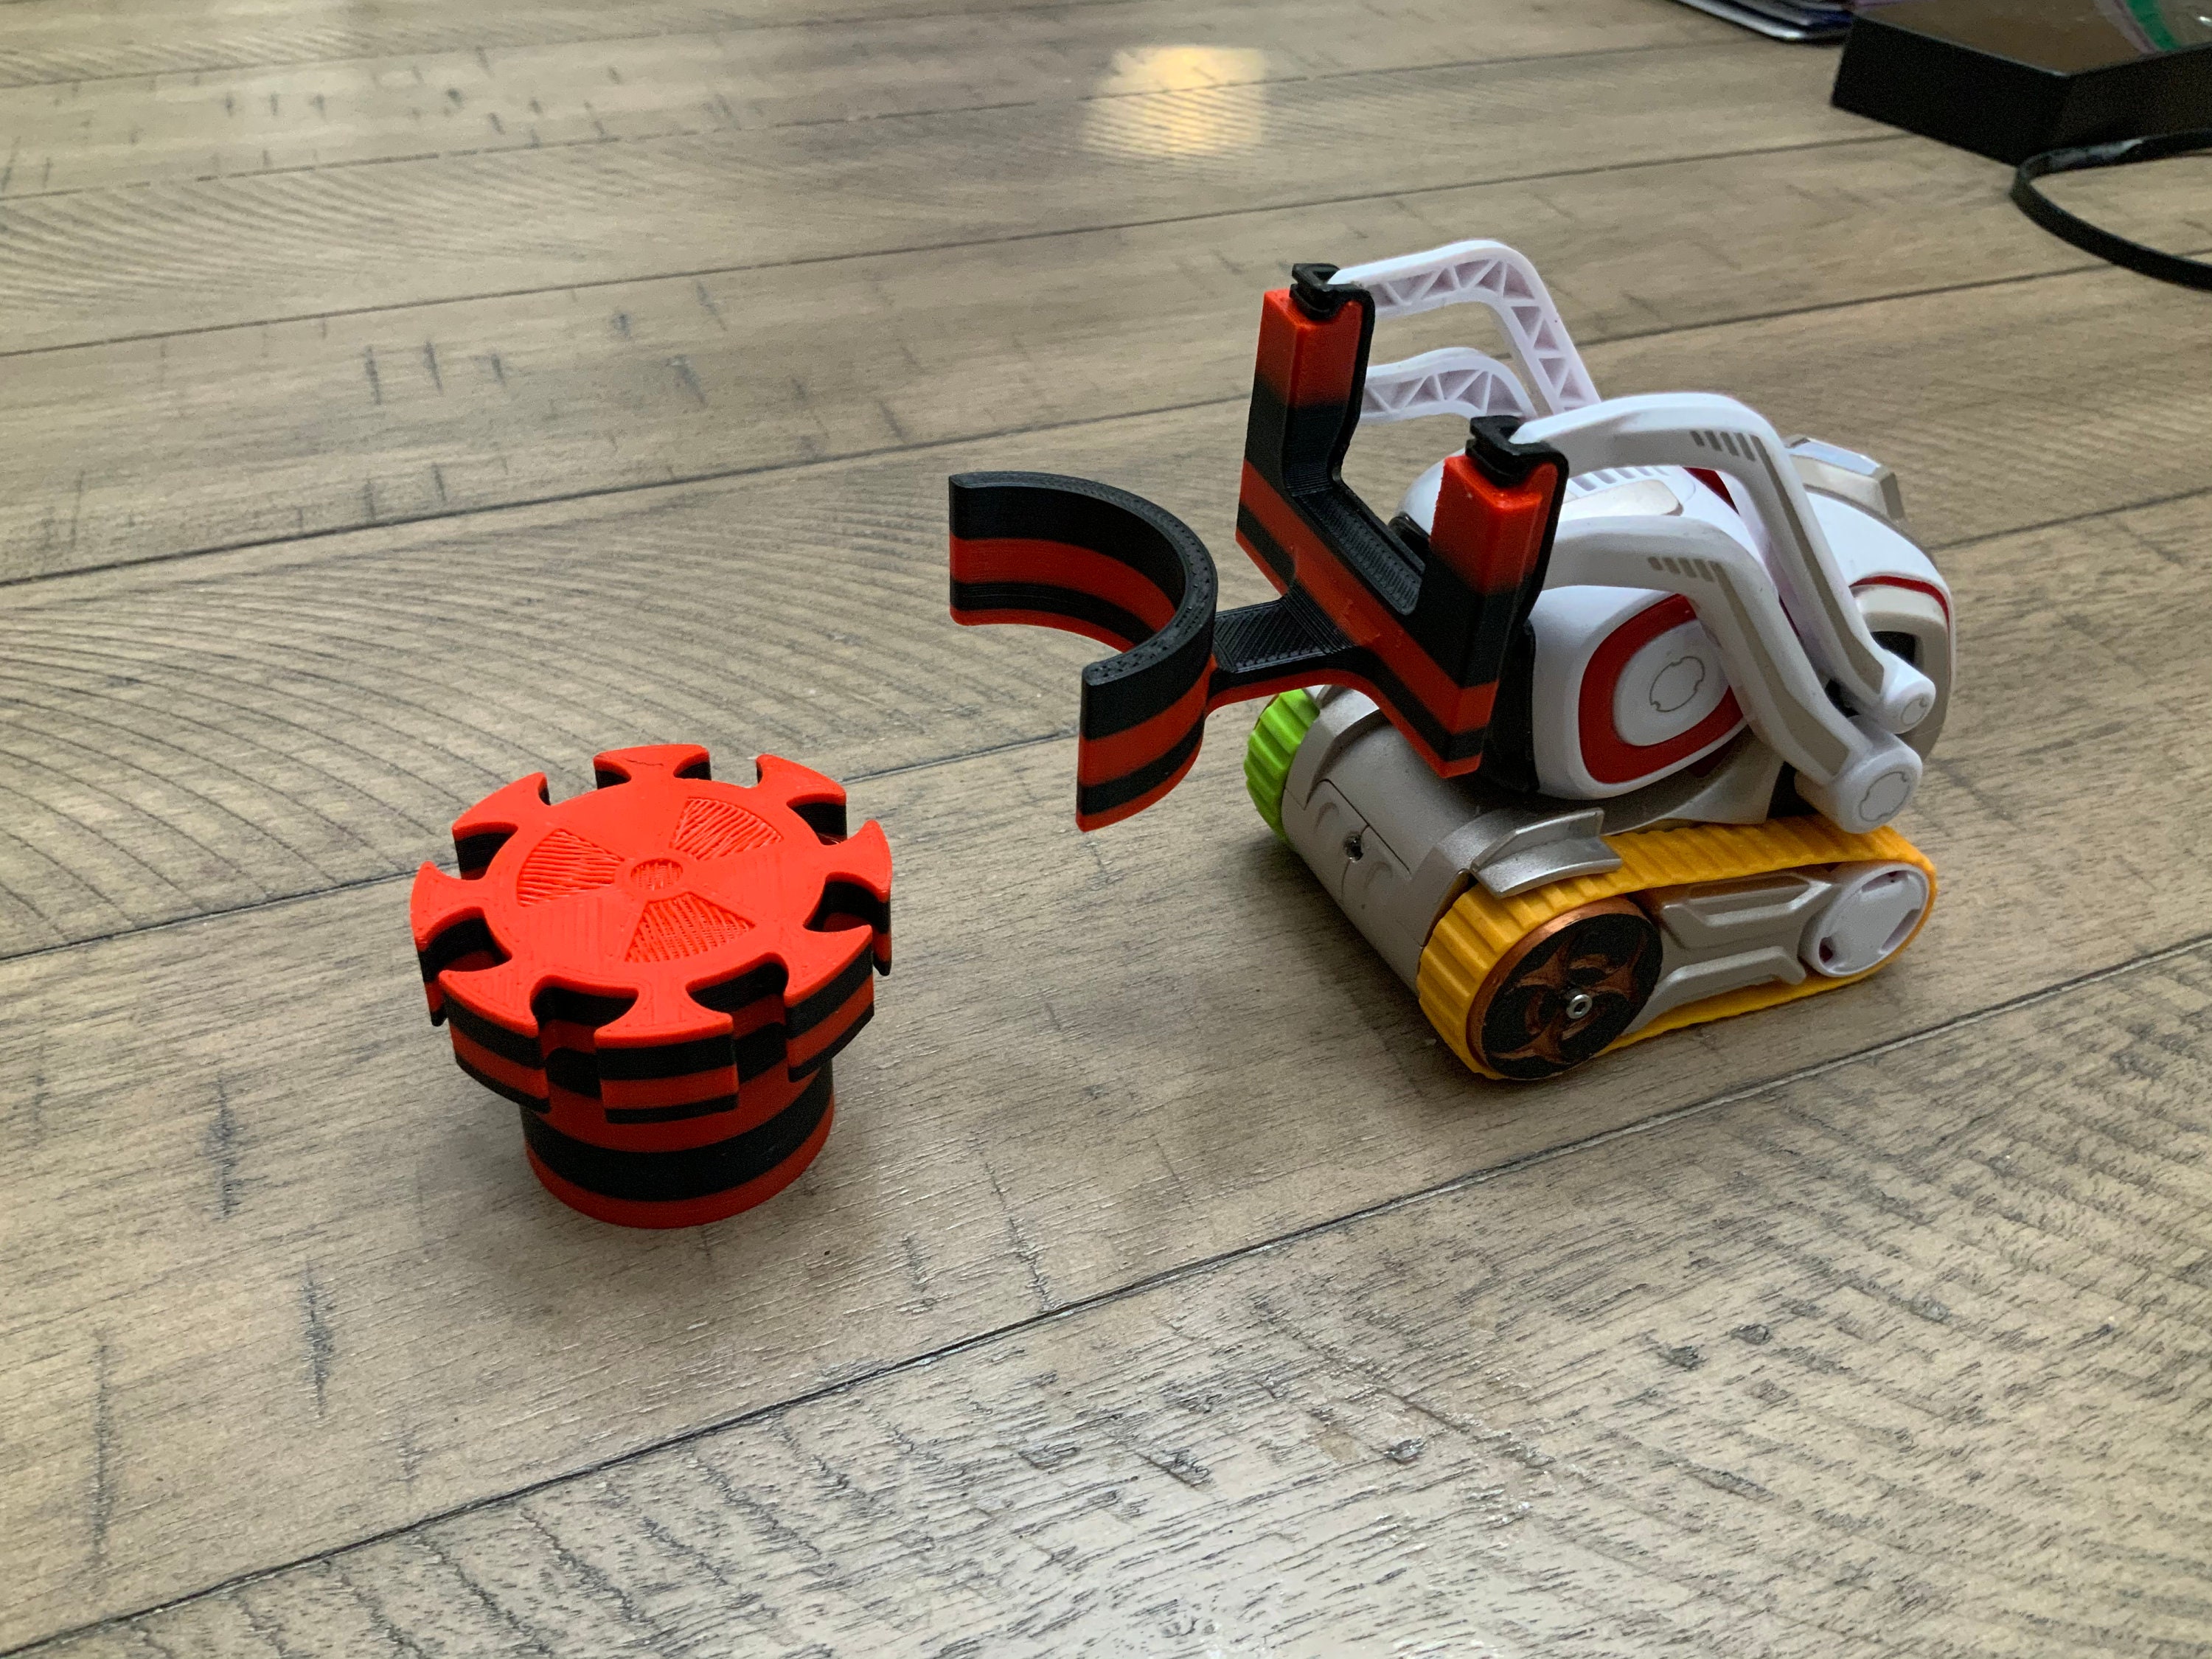 Anki Cozmo Robot -Complete Set with accessories – RoboPros